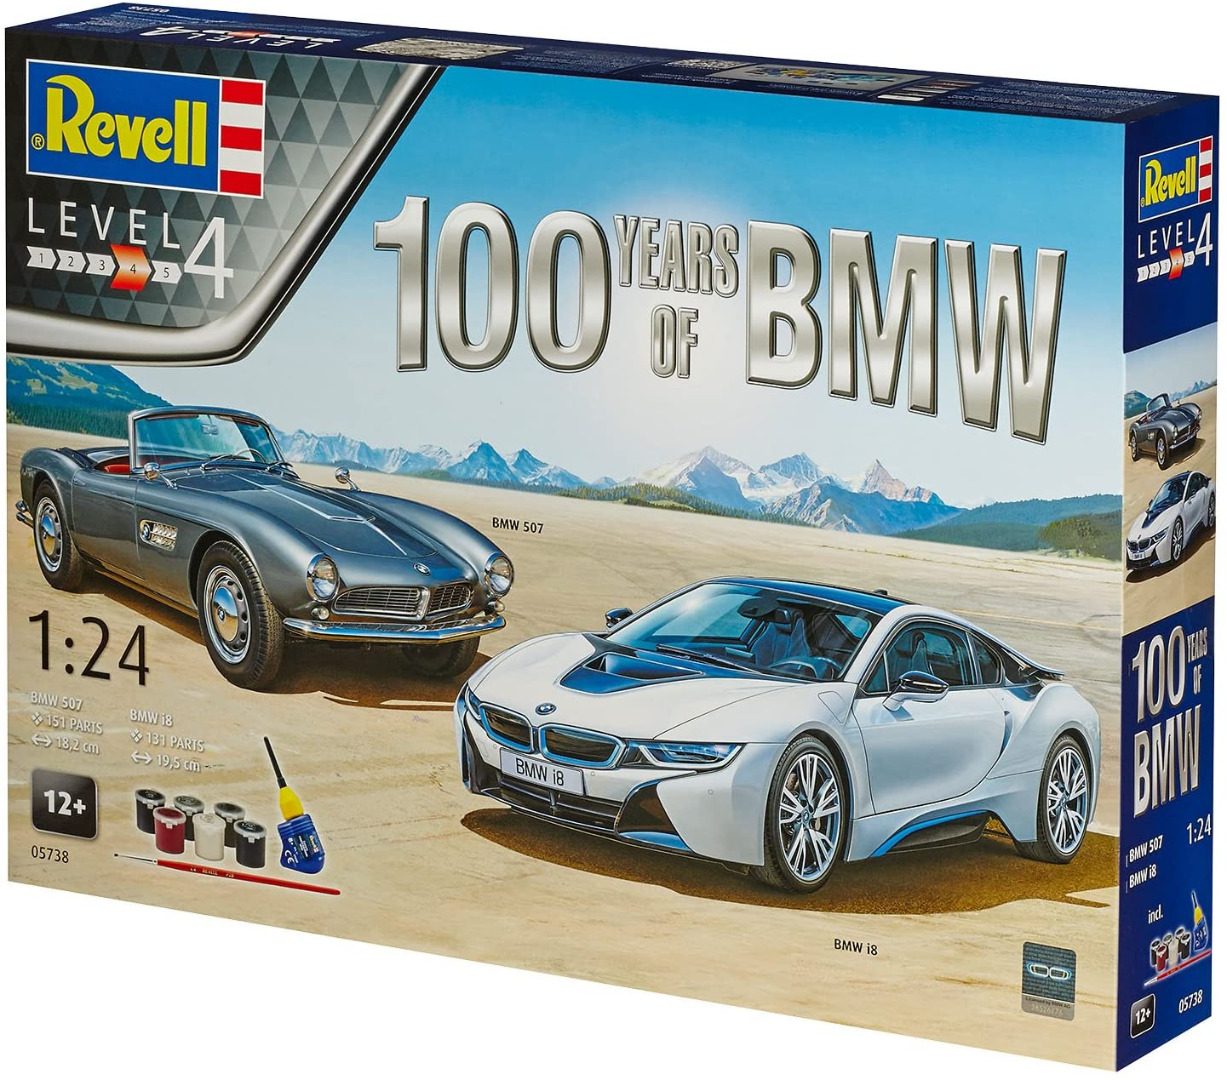 Revell Model Set 100 Years of BMW - BMW 507 BMW i8 1:24